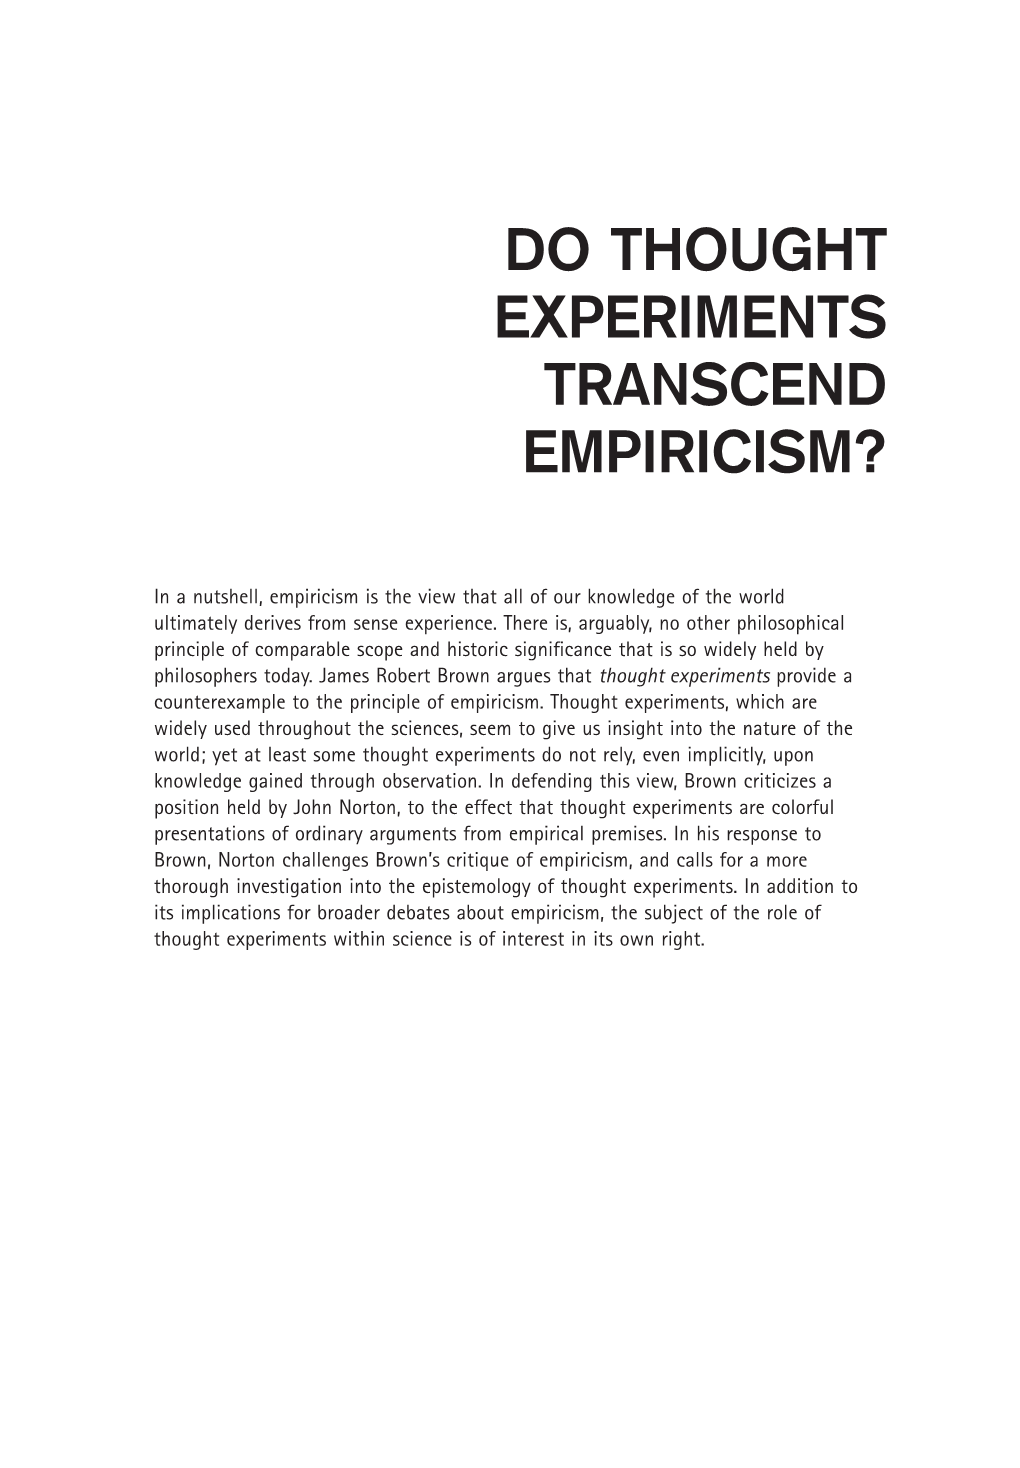 Do Thought Experiments Transcend Empiricism?